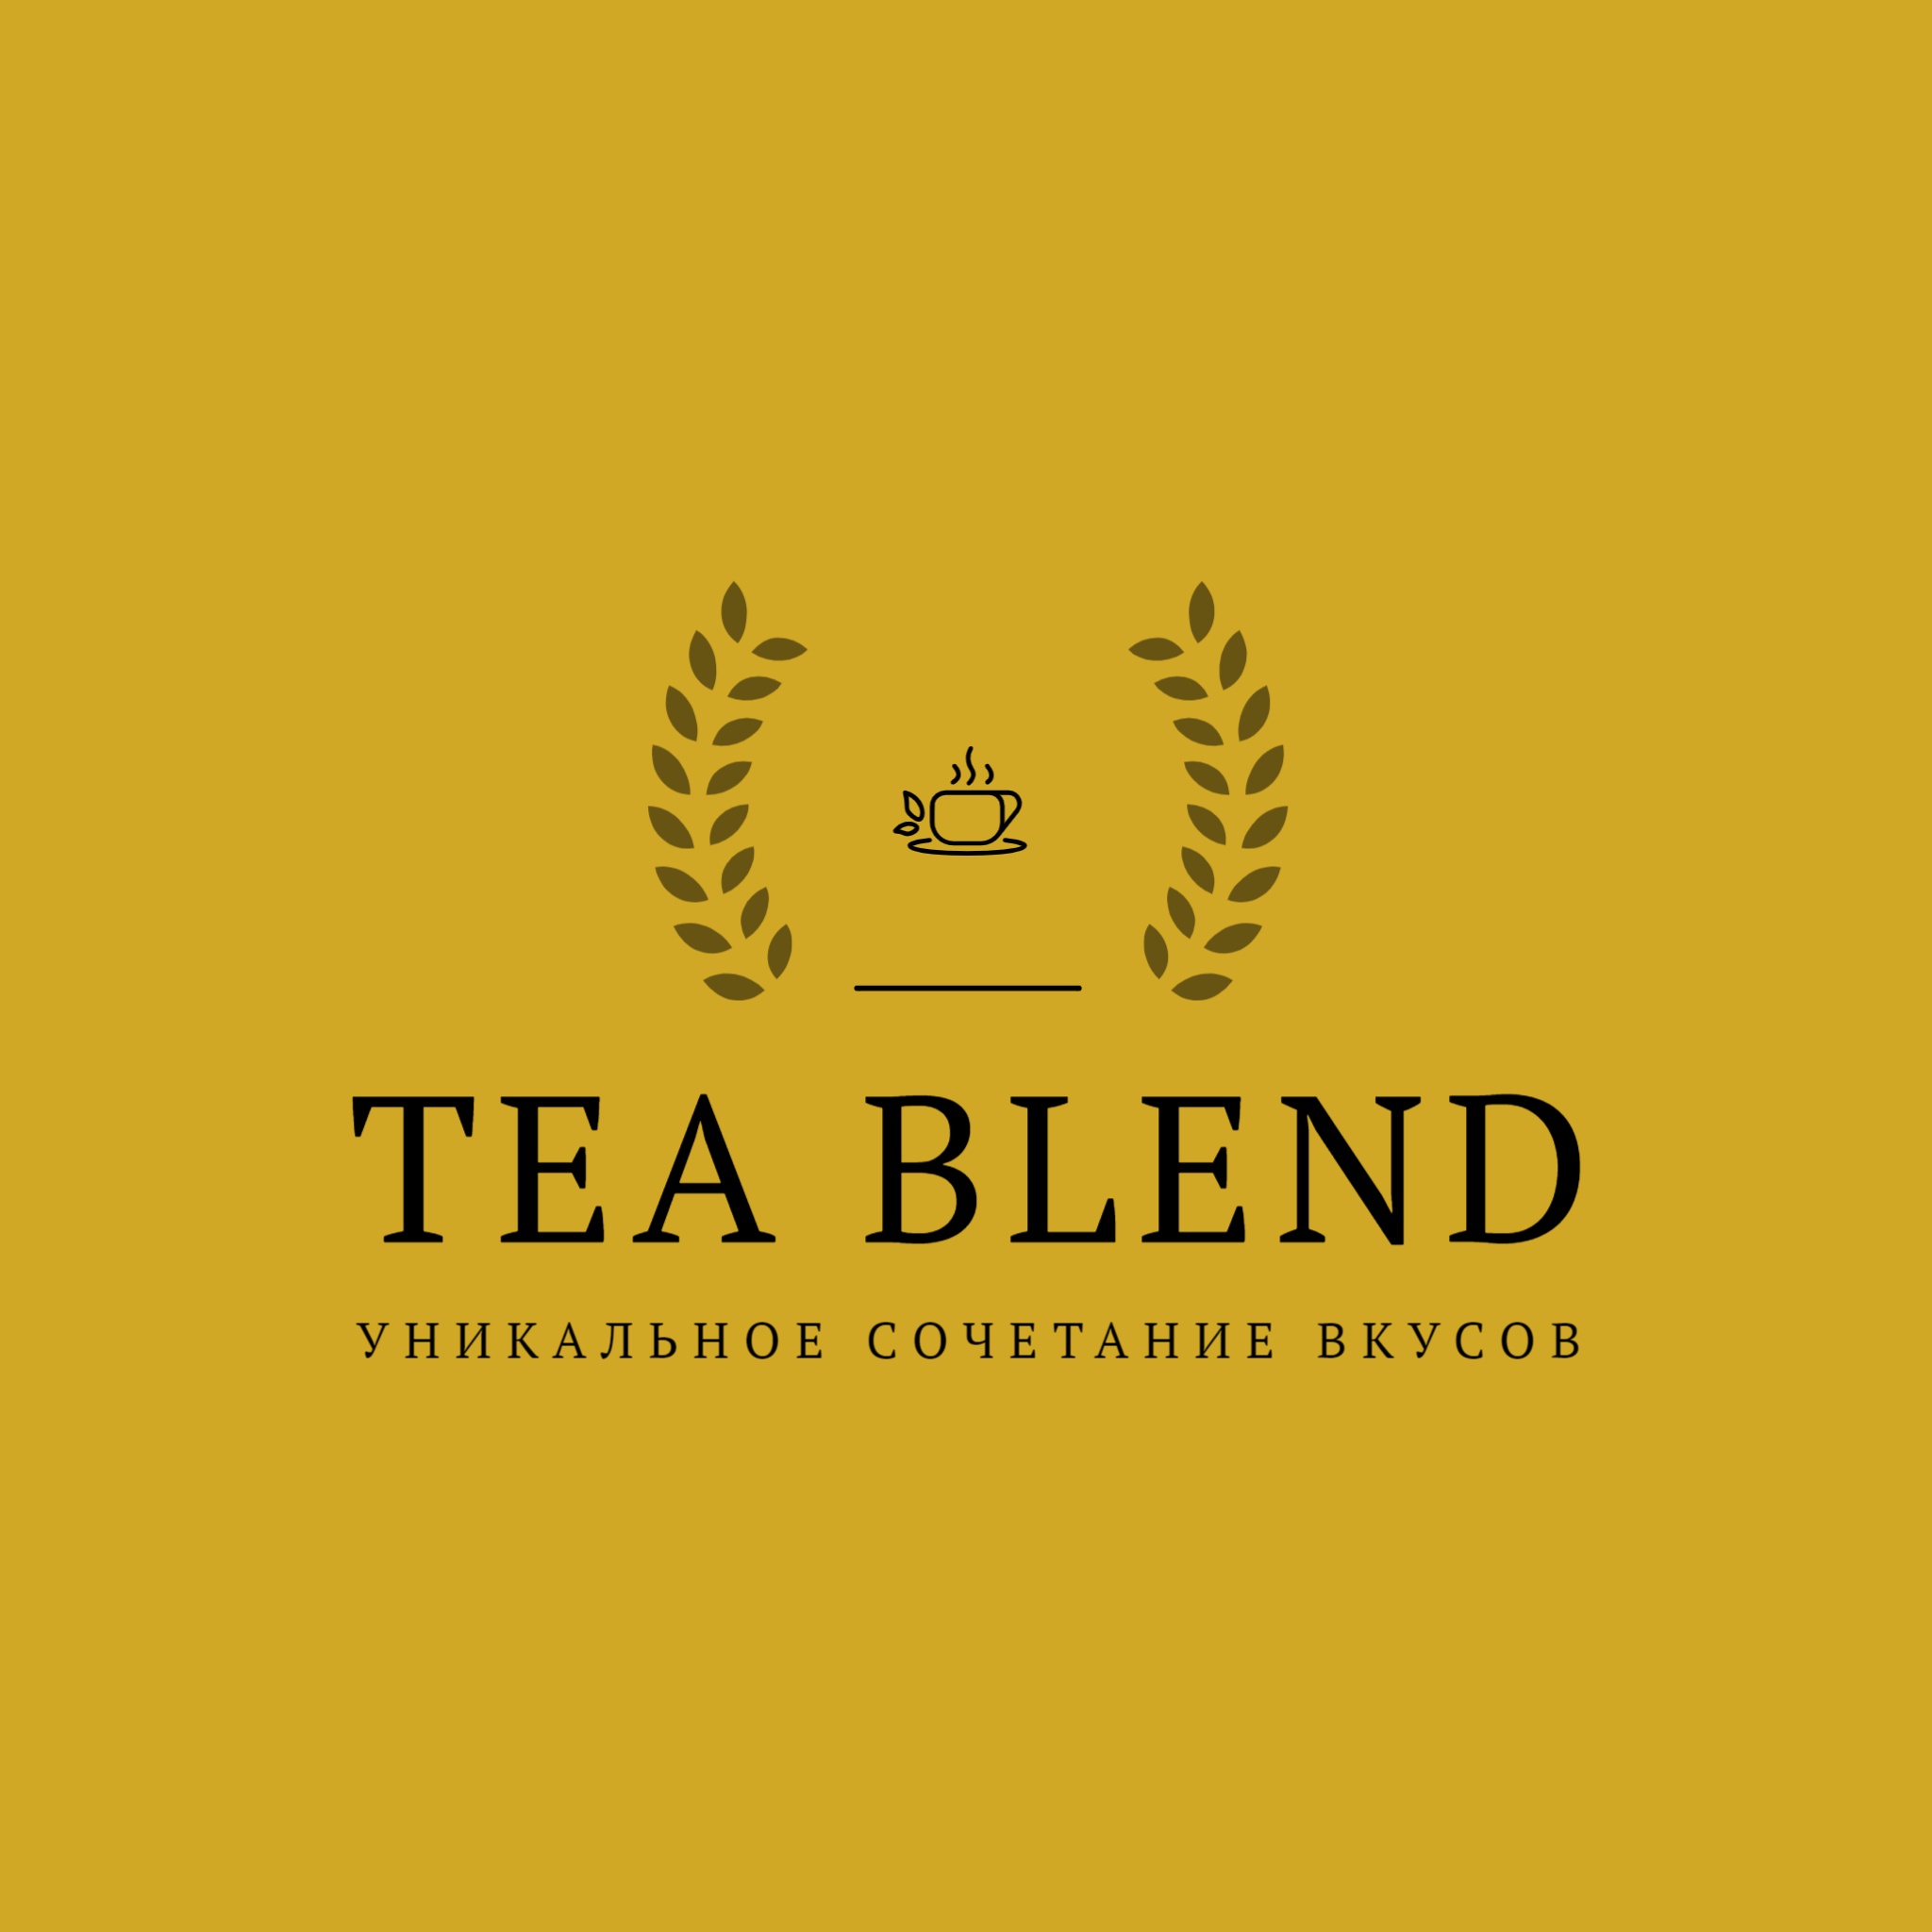 TEA BLEND